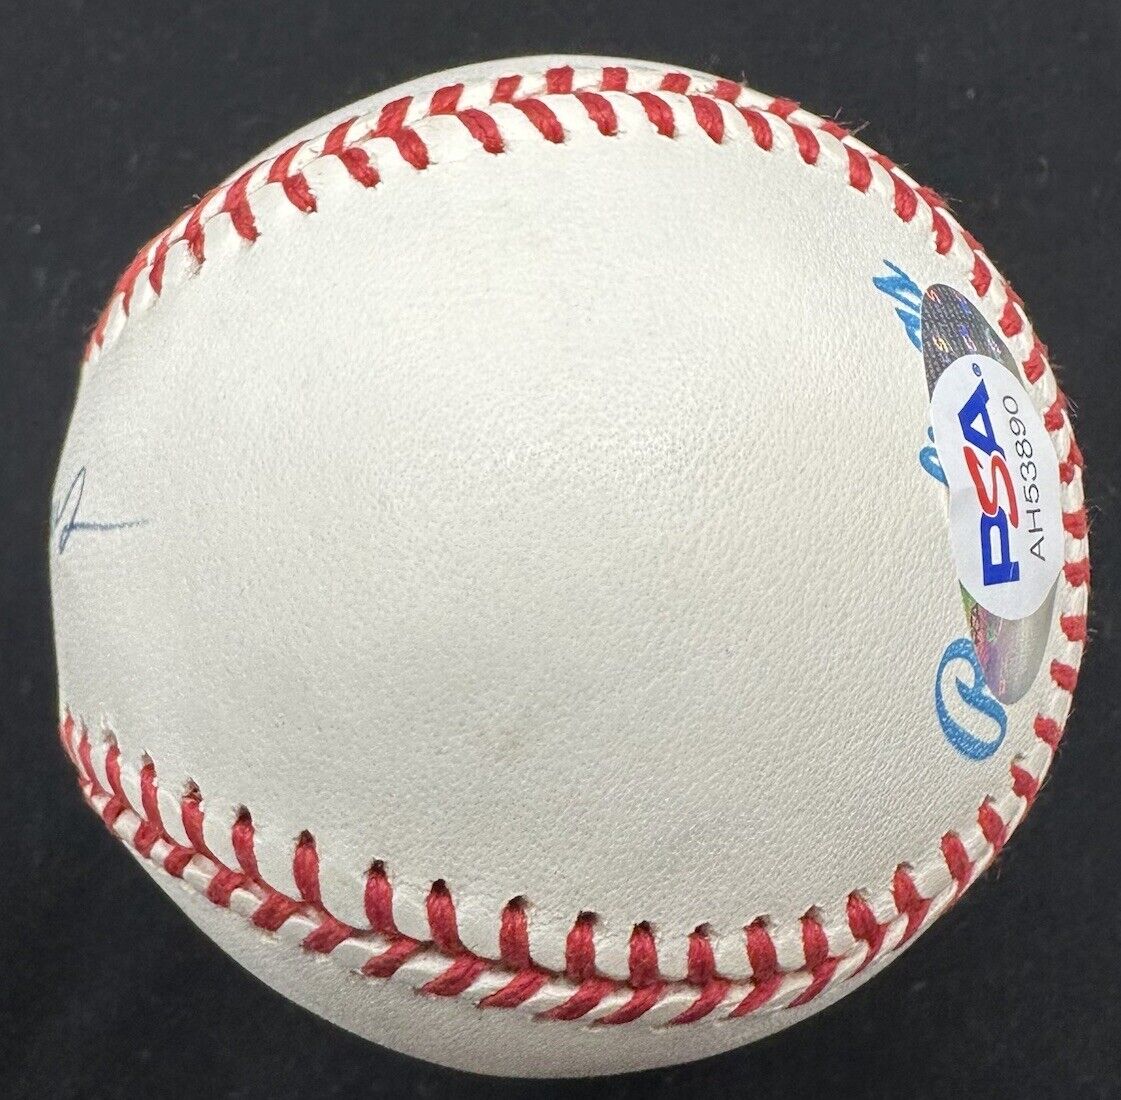 Frank Thomas Rookie Early Signature Signed Baseball PSA/DNA